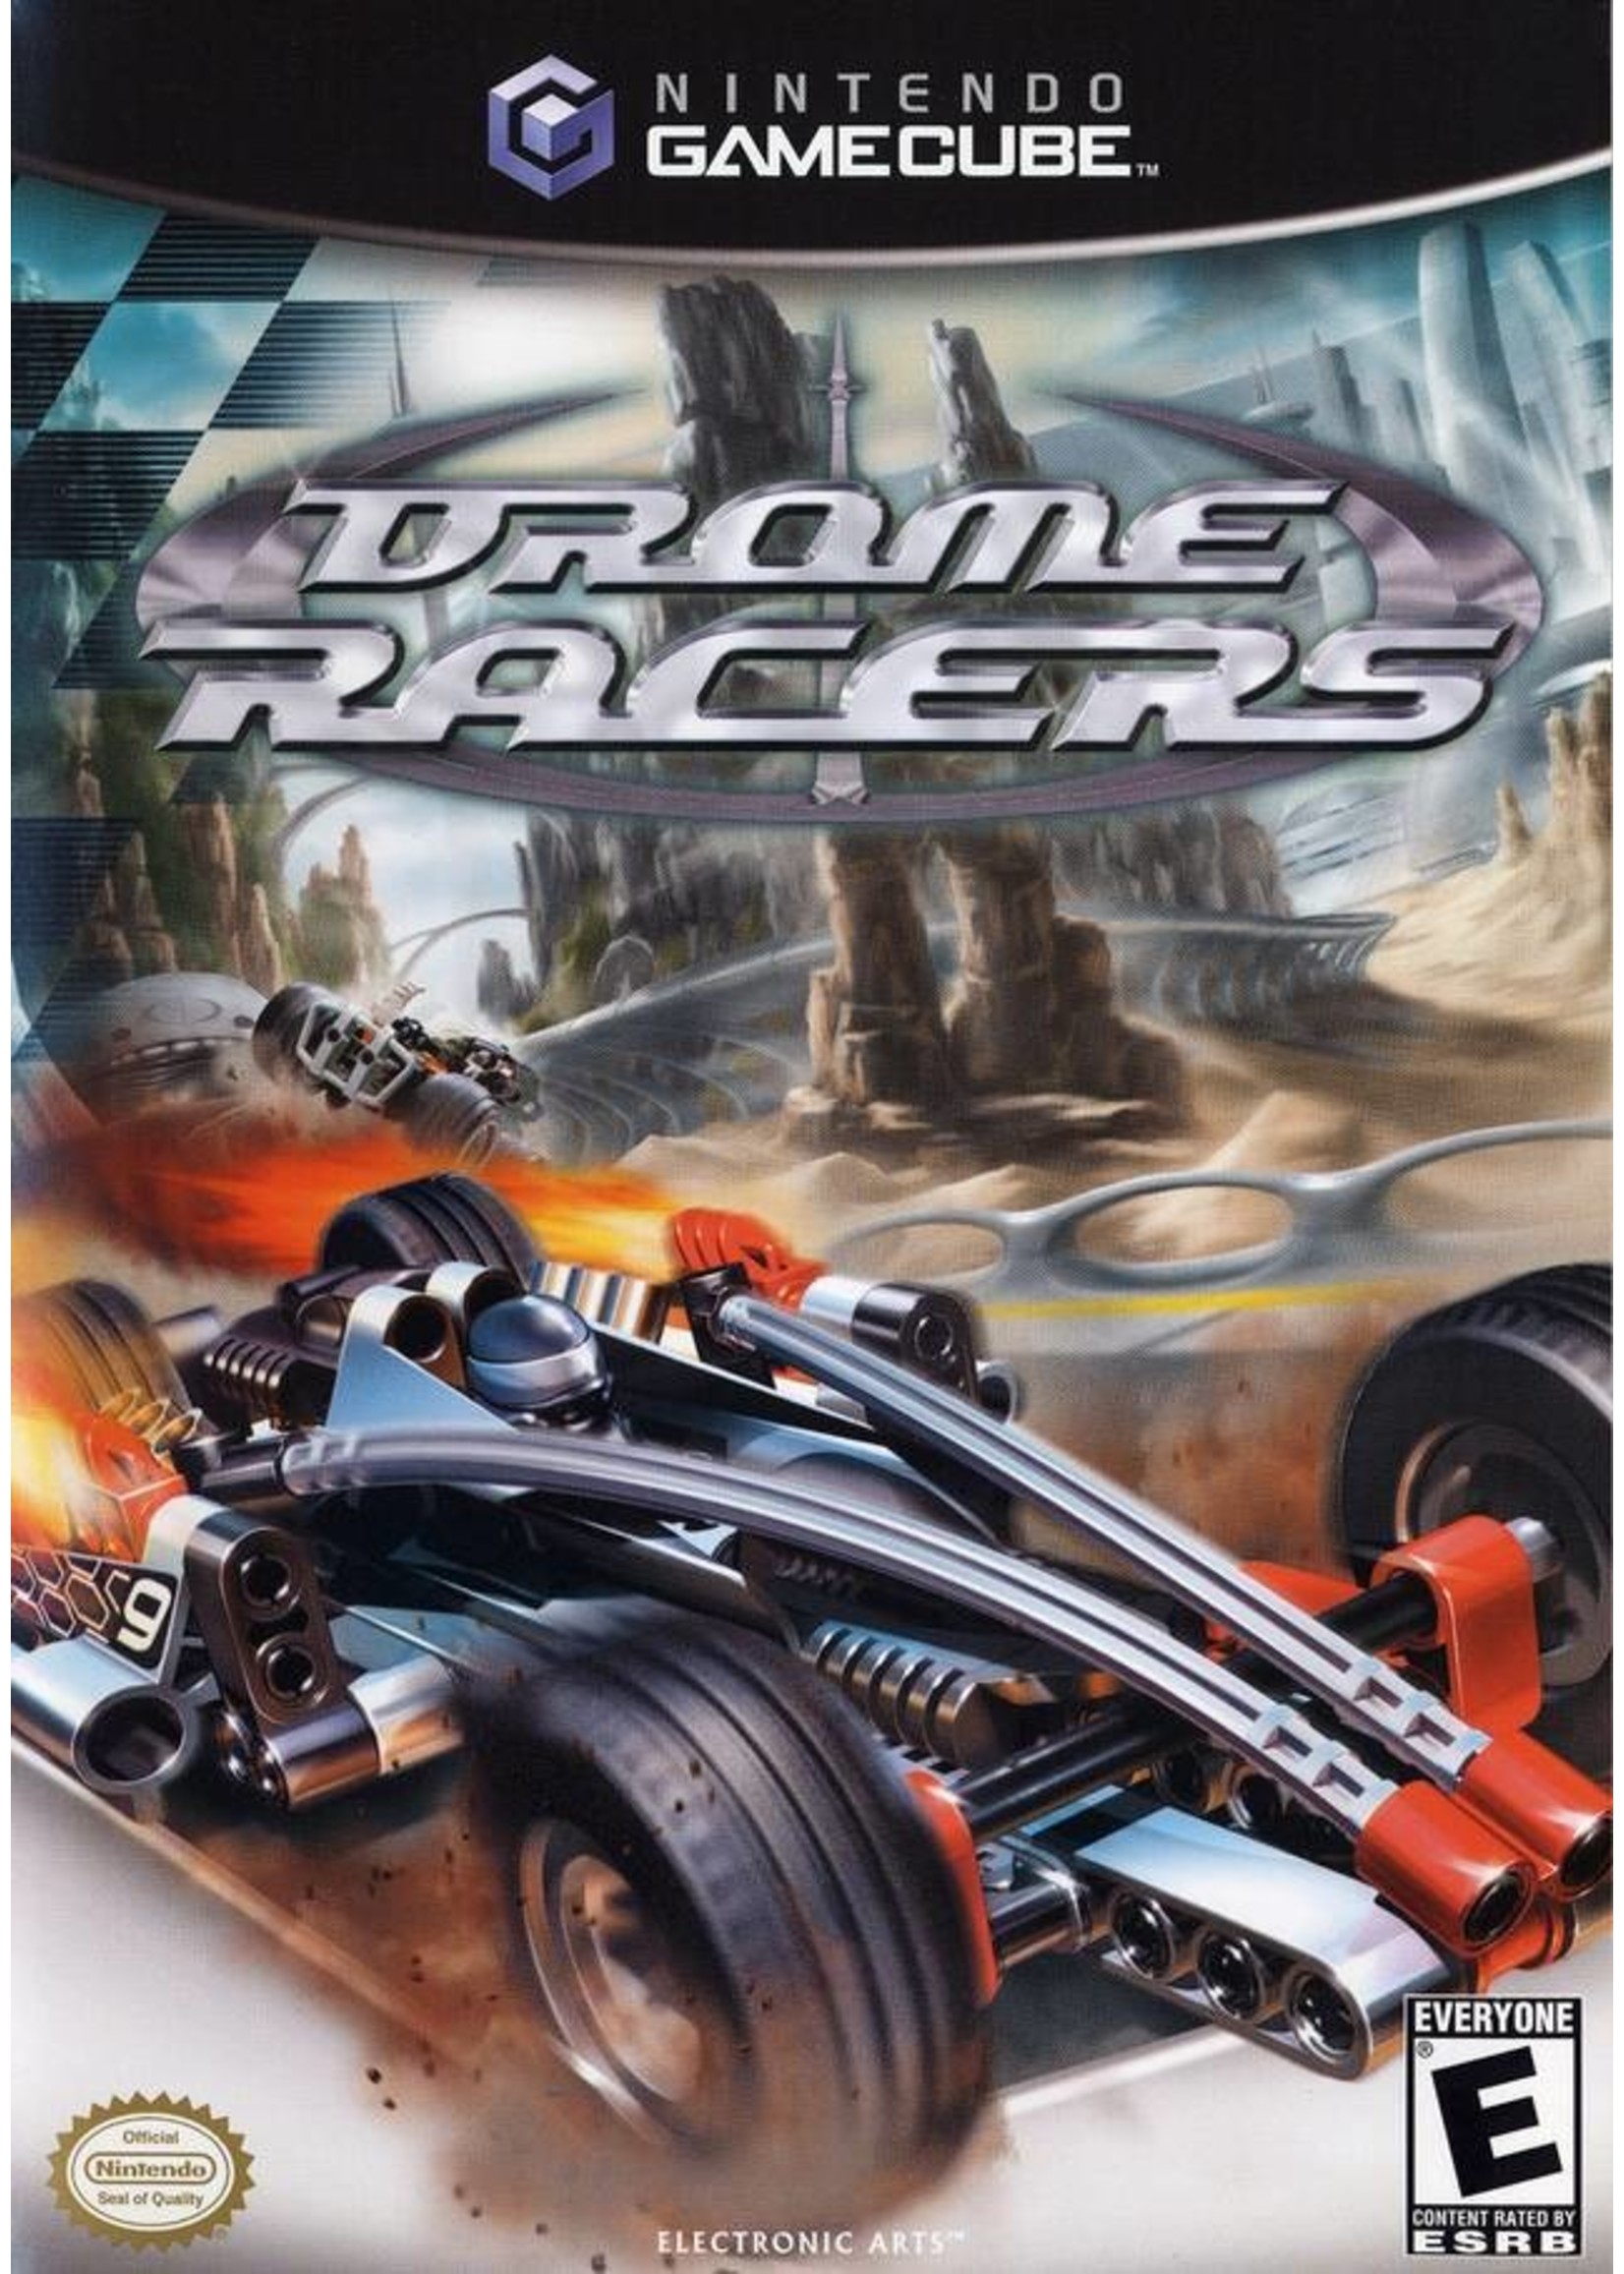 Nintendo Gamecube Drome Racers